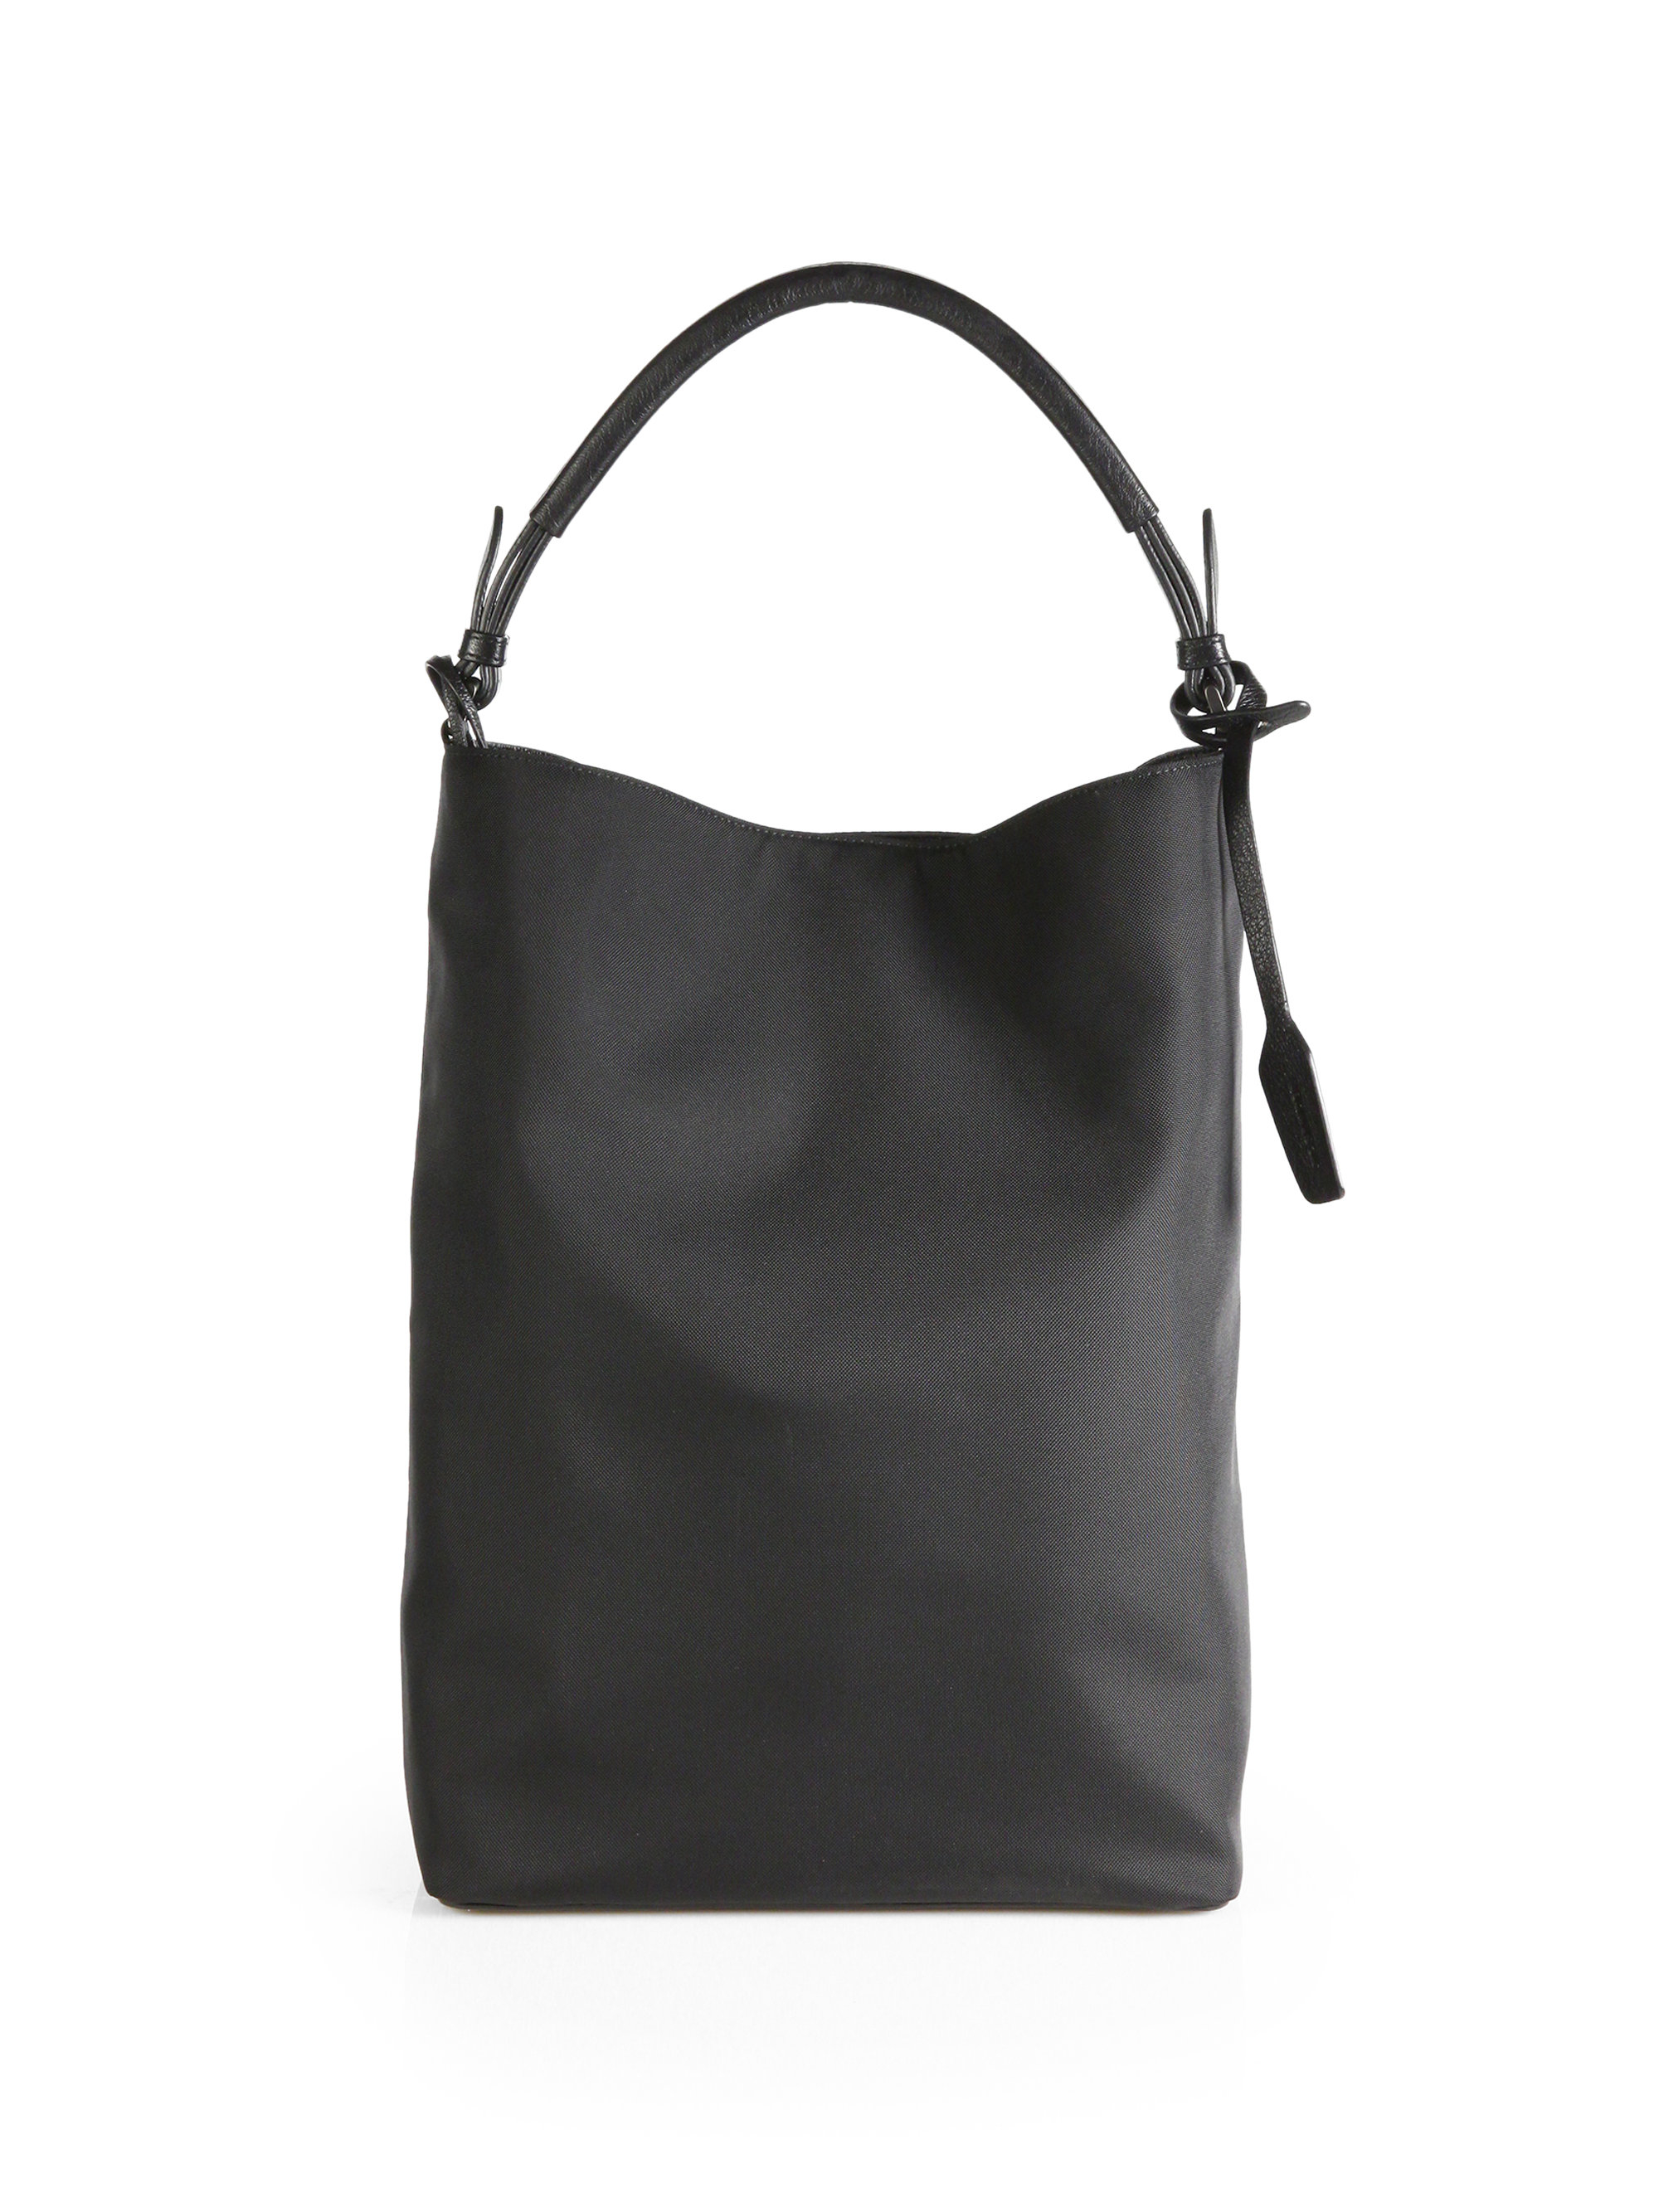 Jil Sander Large Nylon Hobo Bag in Black - Lyst